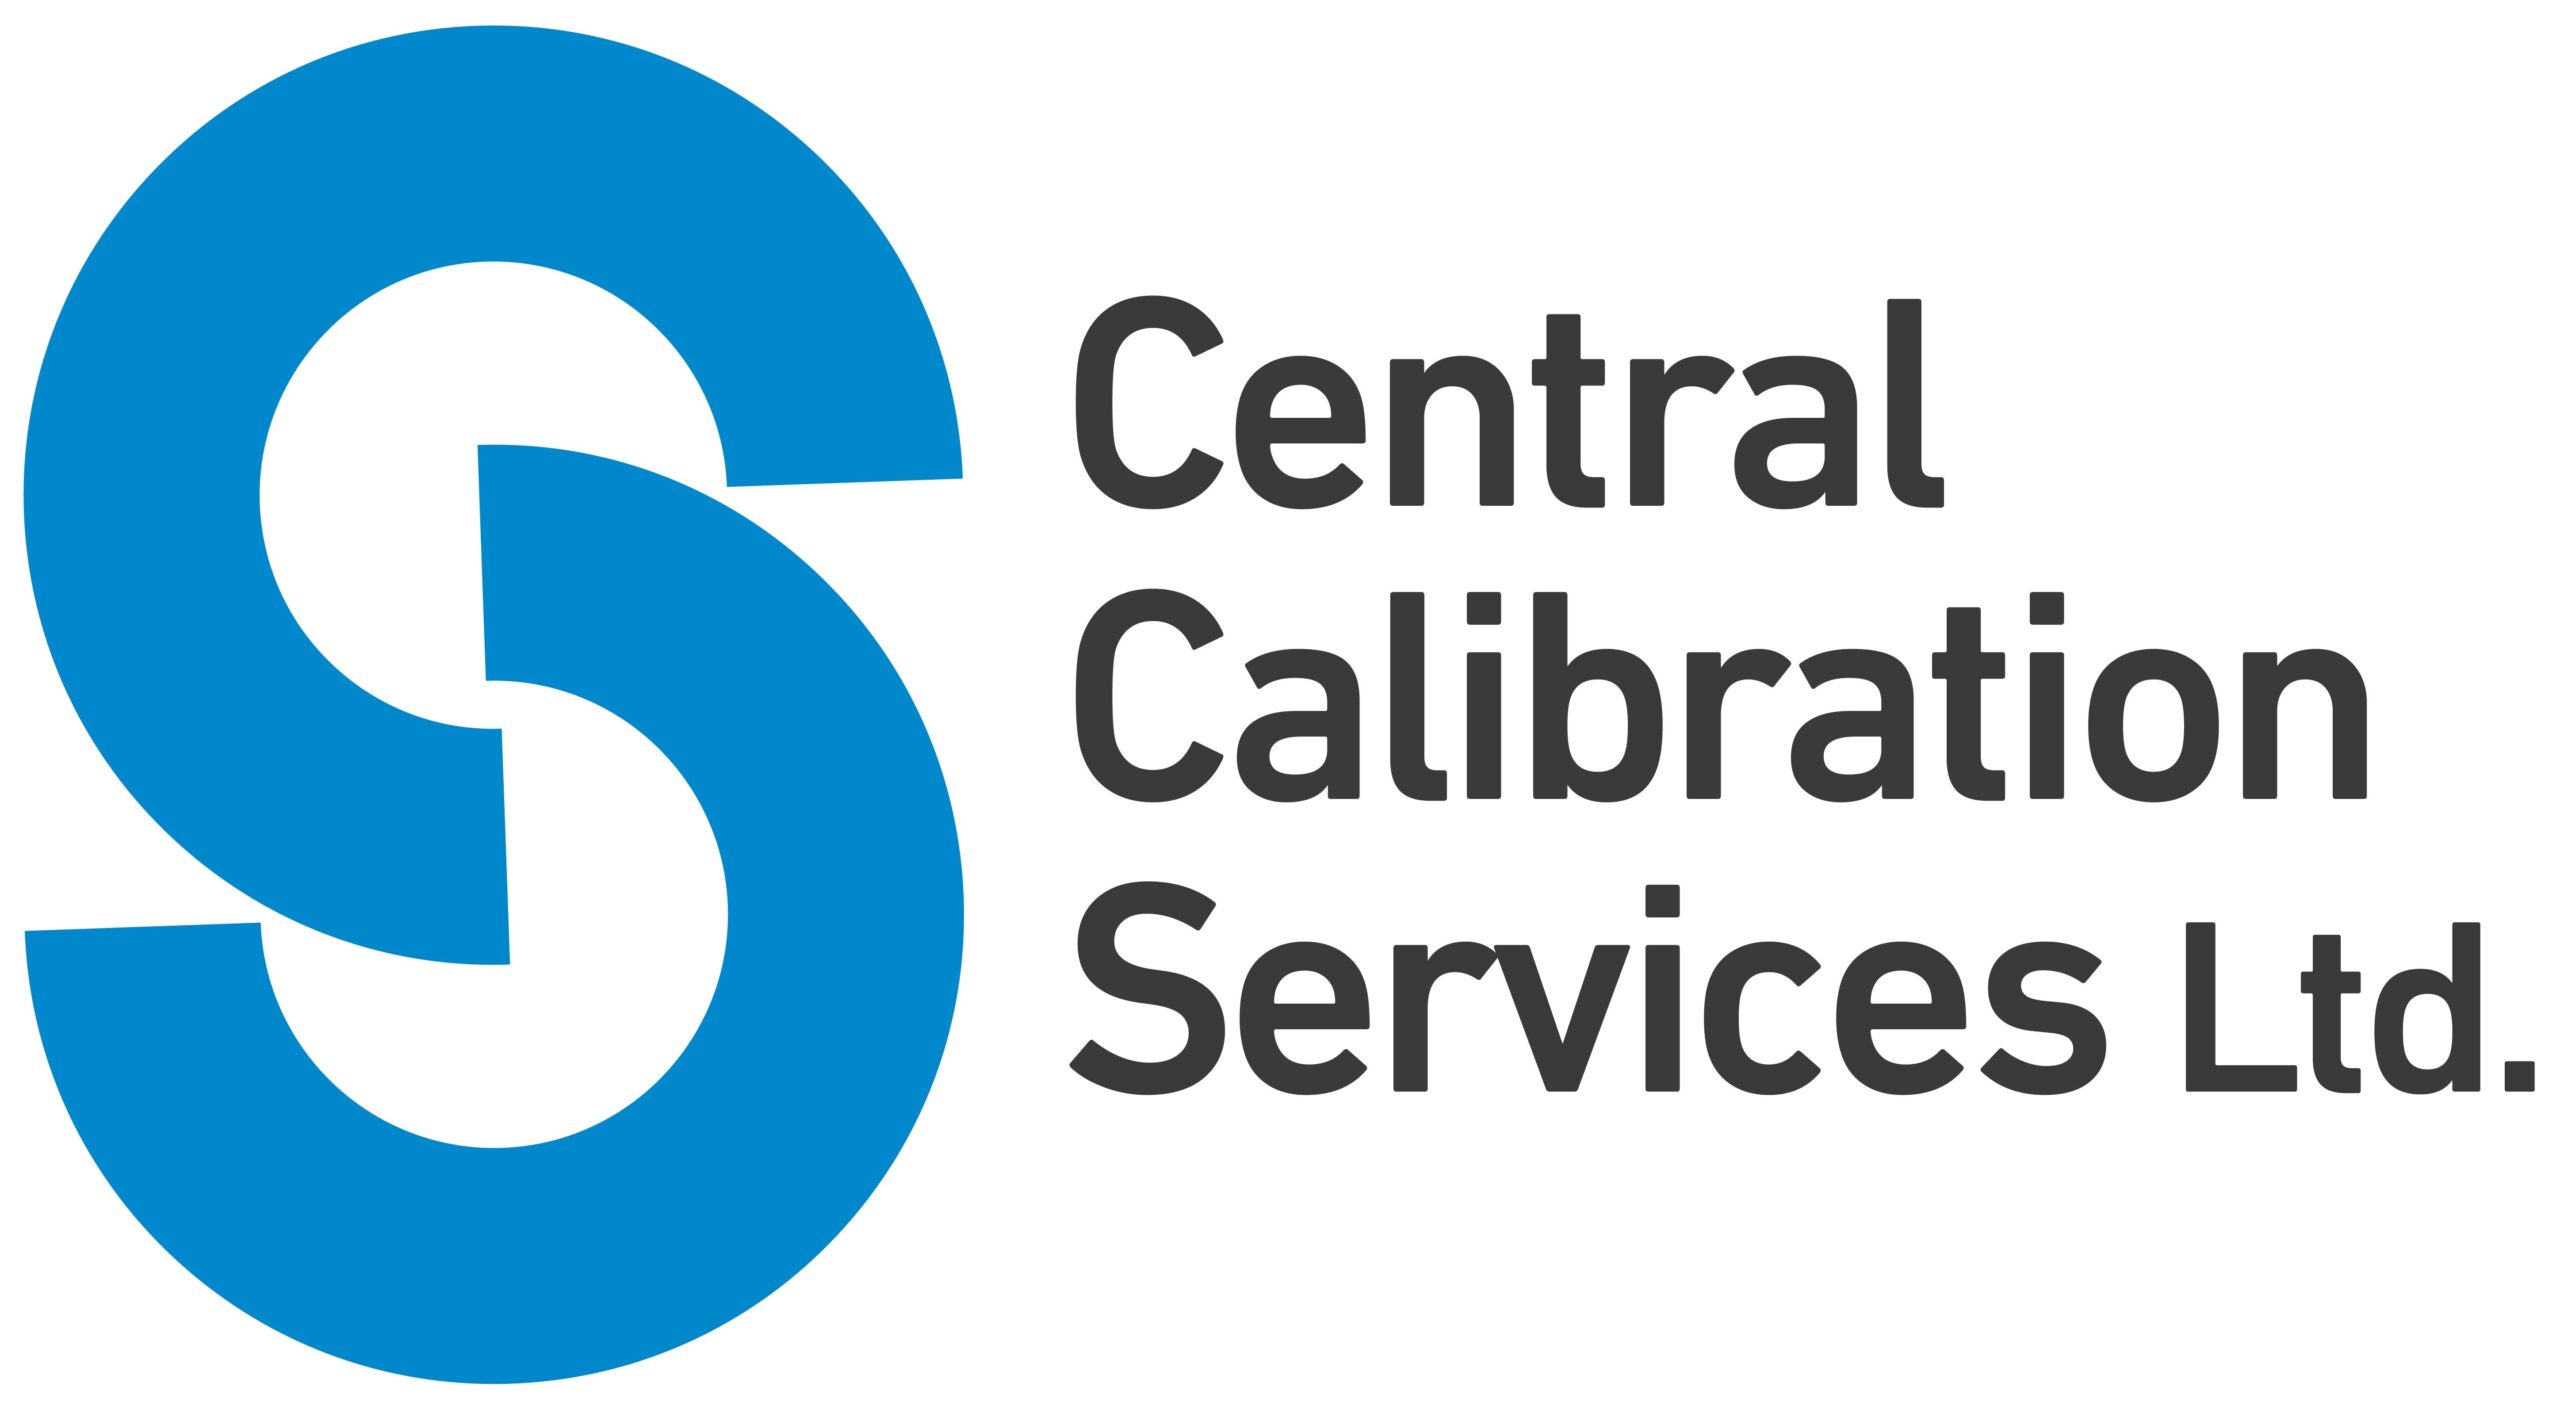 Central Calibration Services